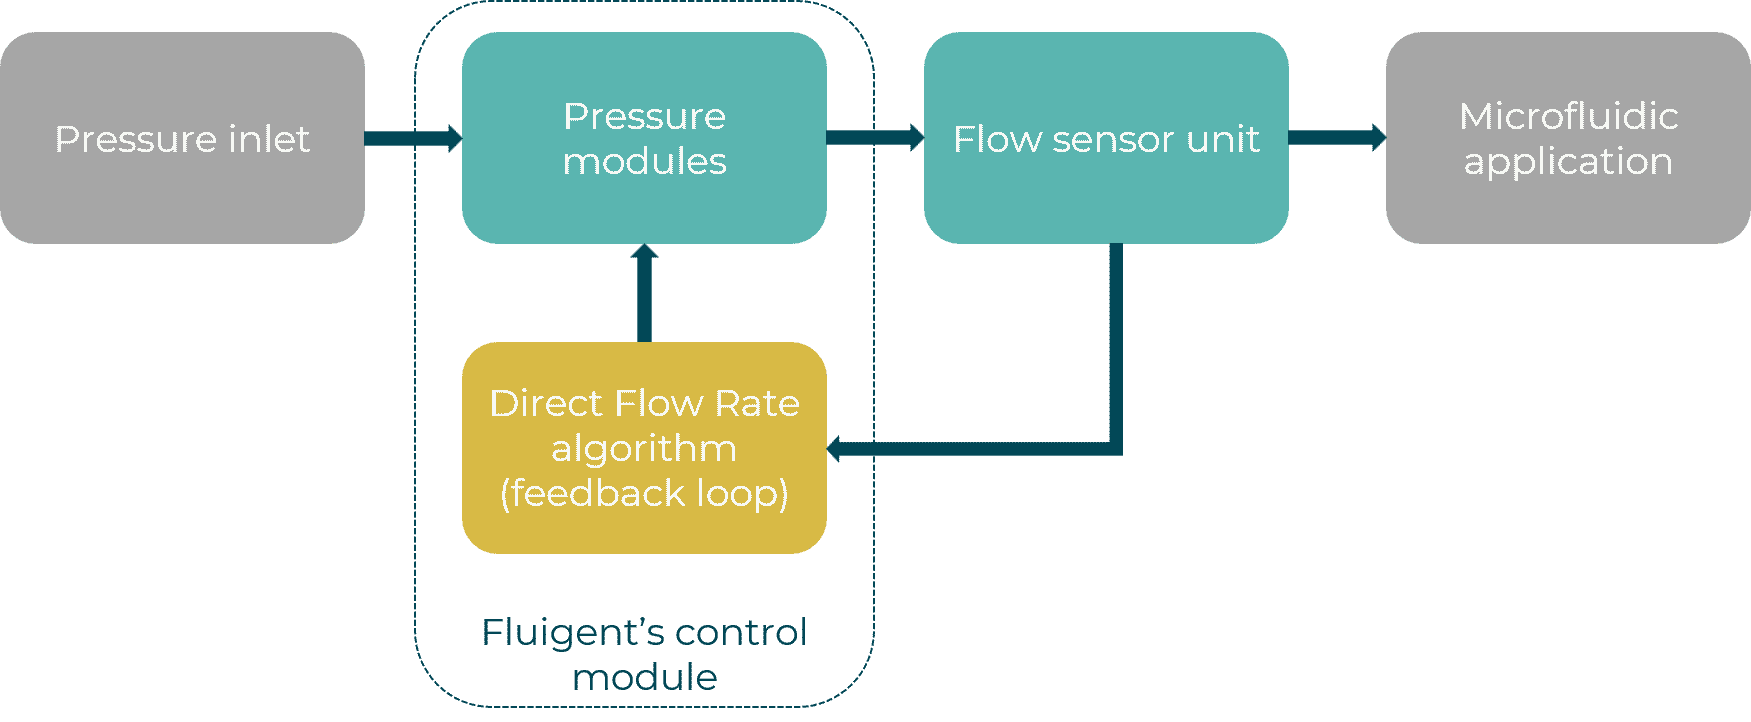 operating principle of the DFC Microfluidic flow control algorithm